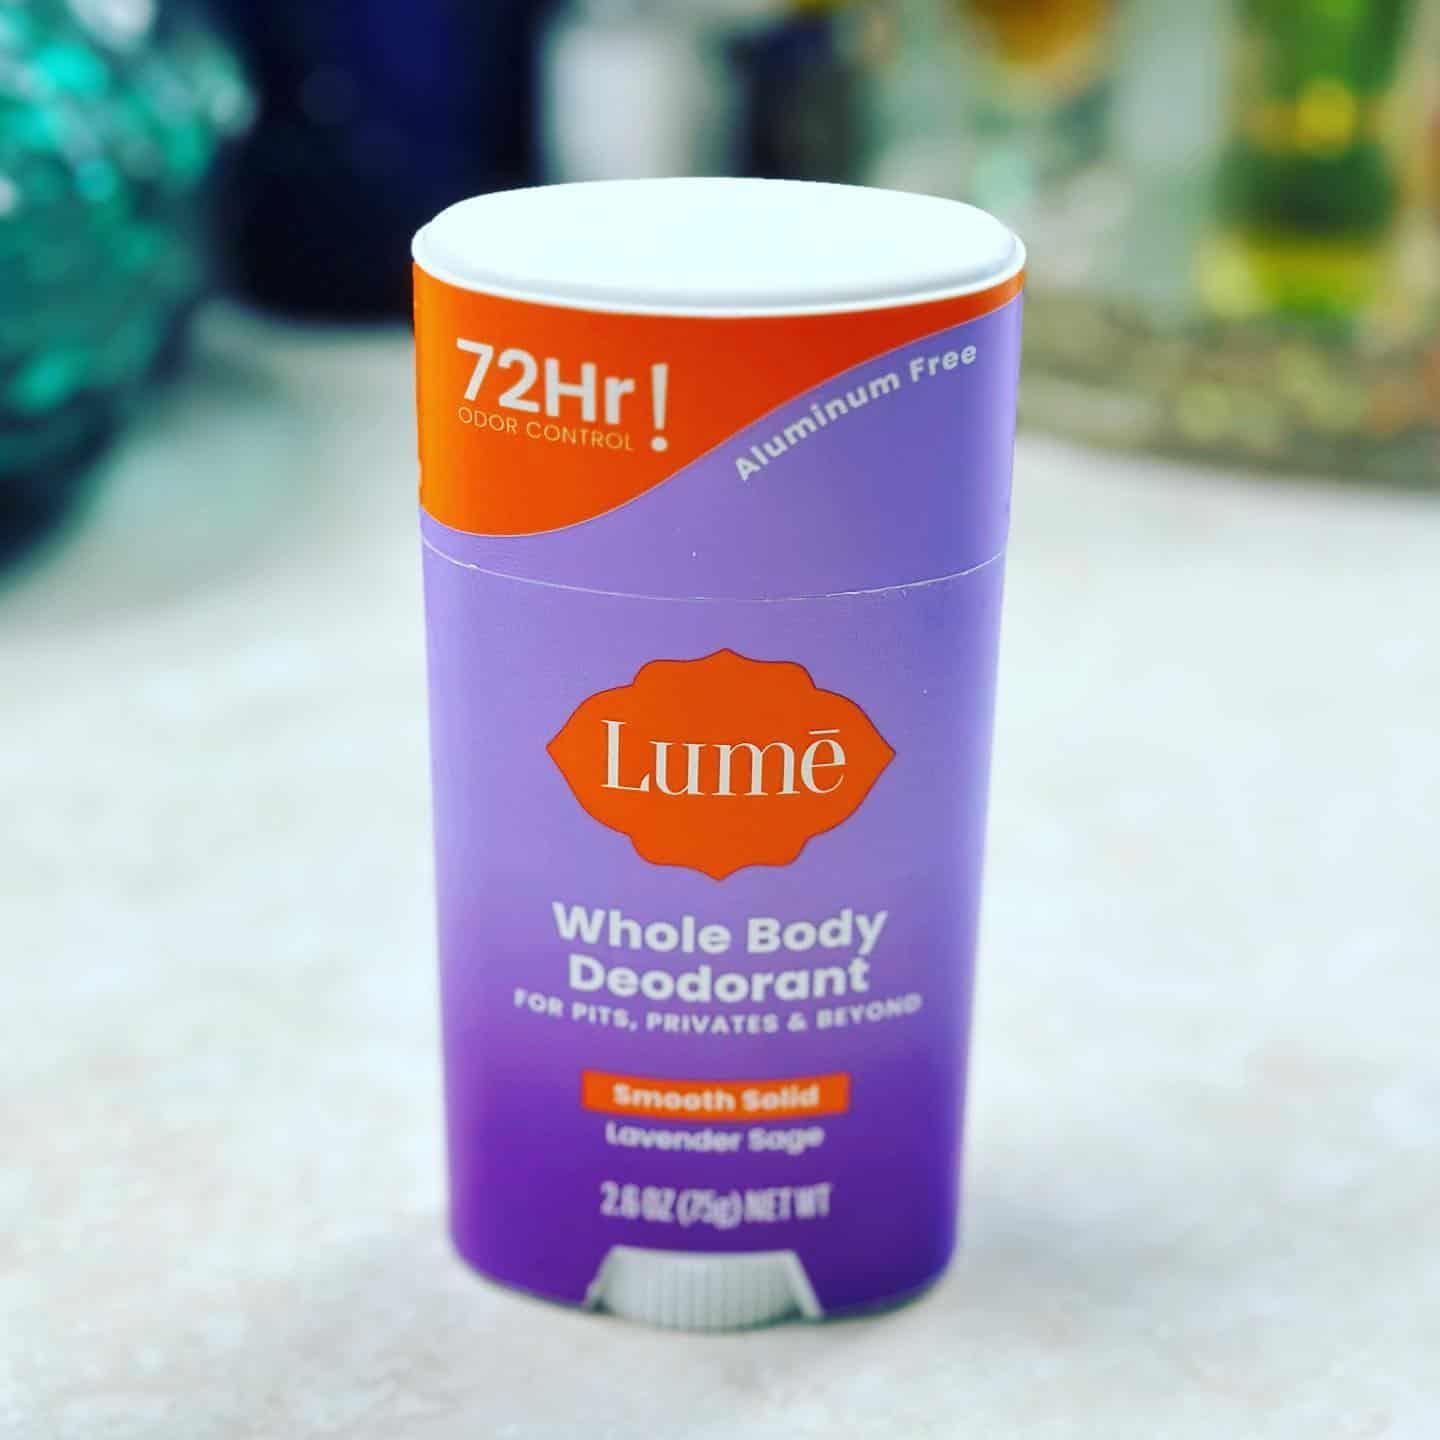 Lavender Sage scent deodorant by Lume